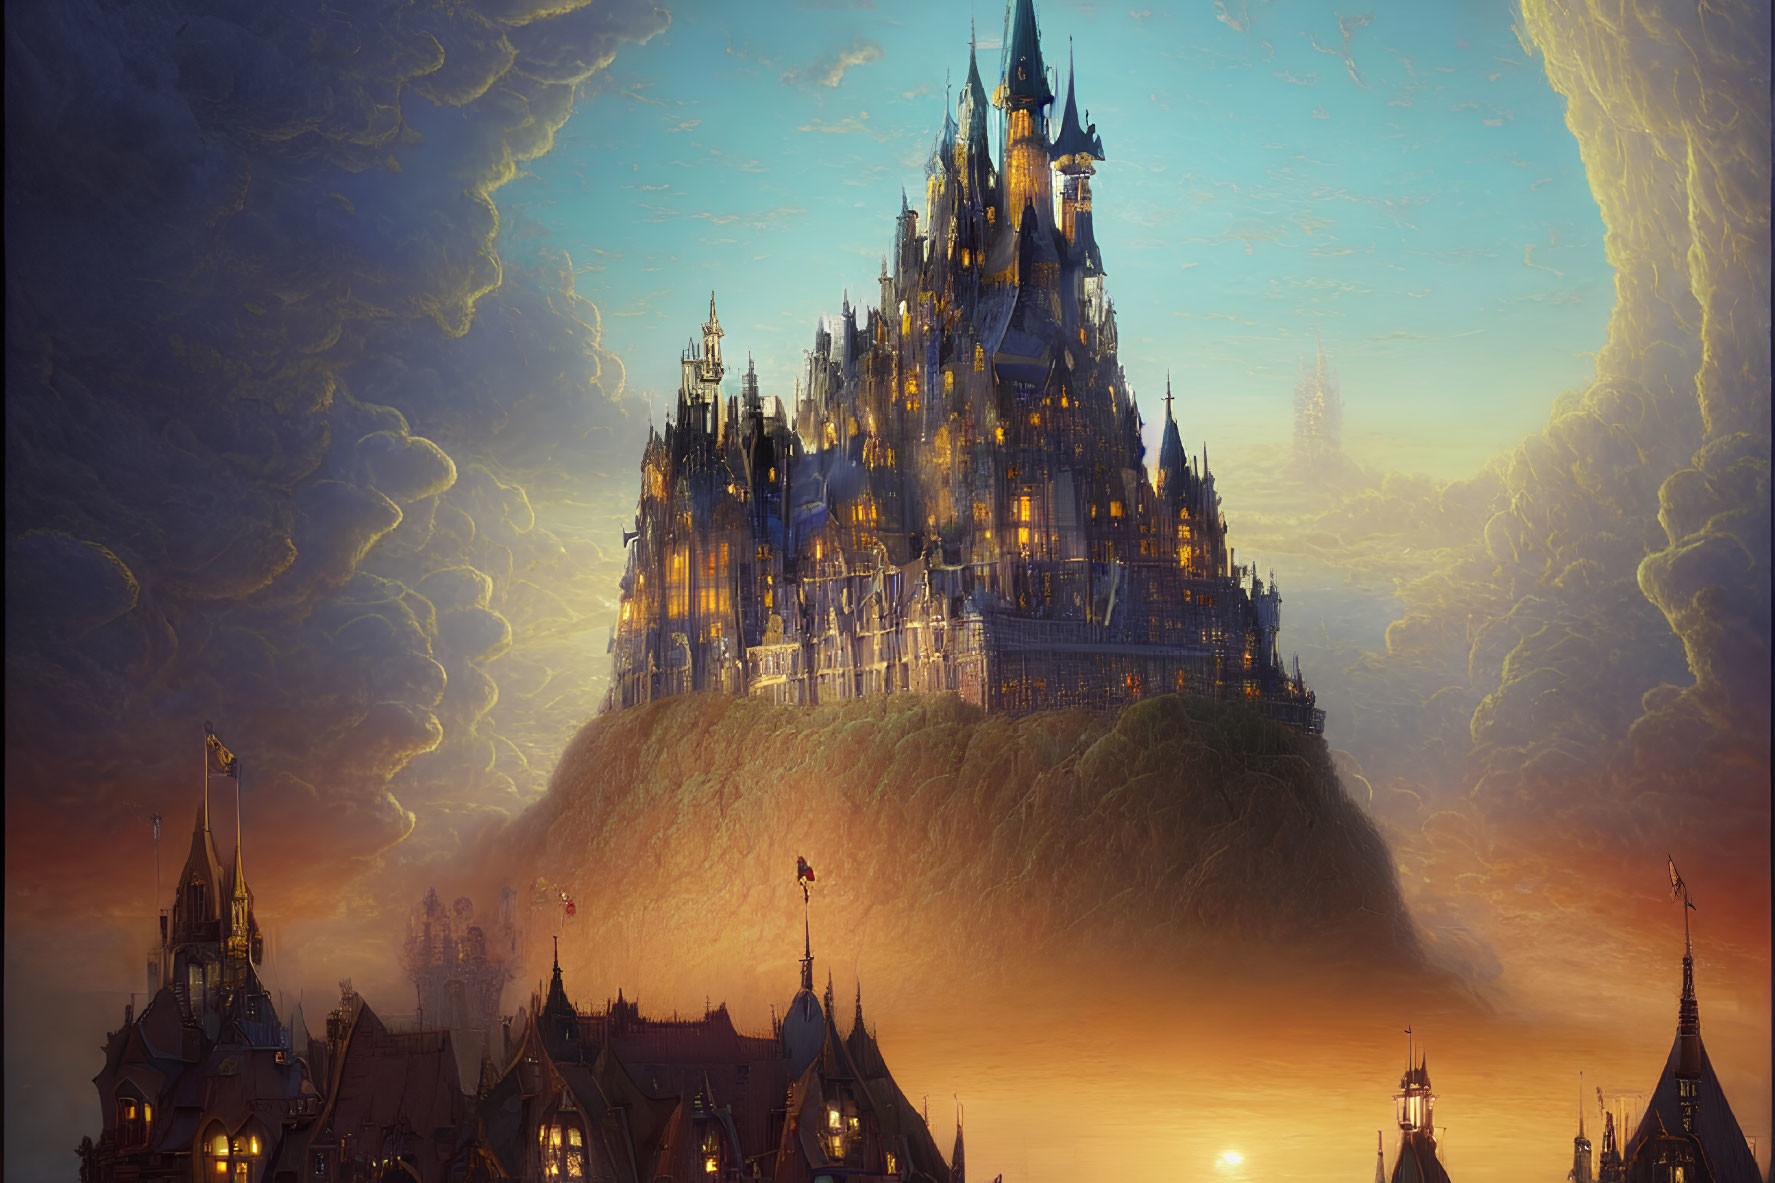 Majestic fantasy castle on cliff with spires under orange sunset sky